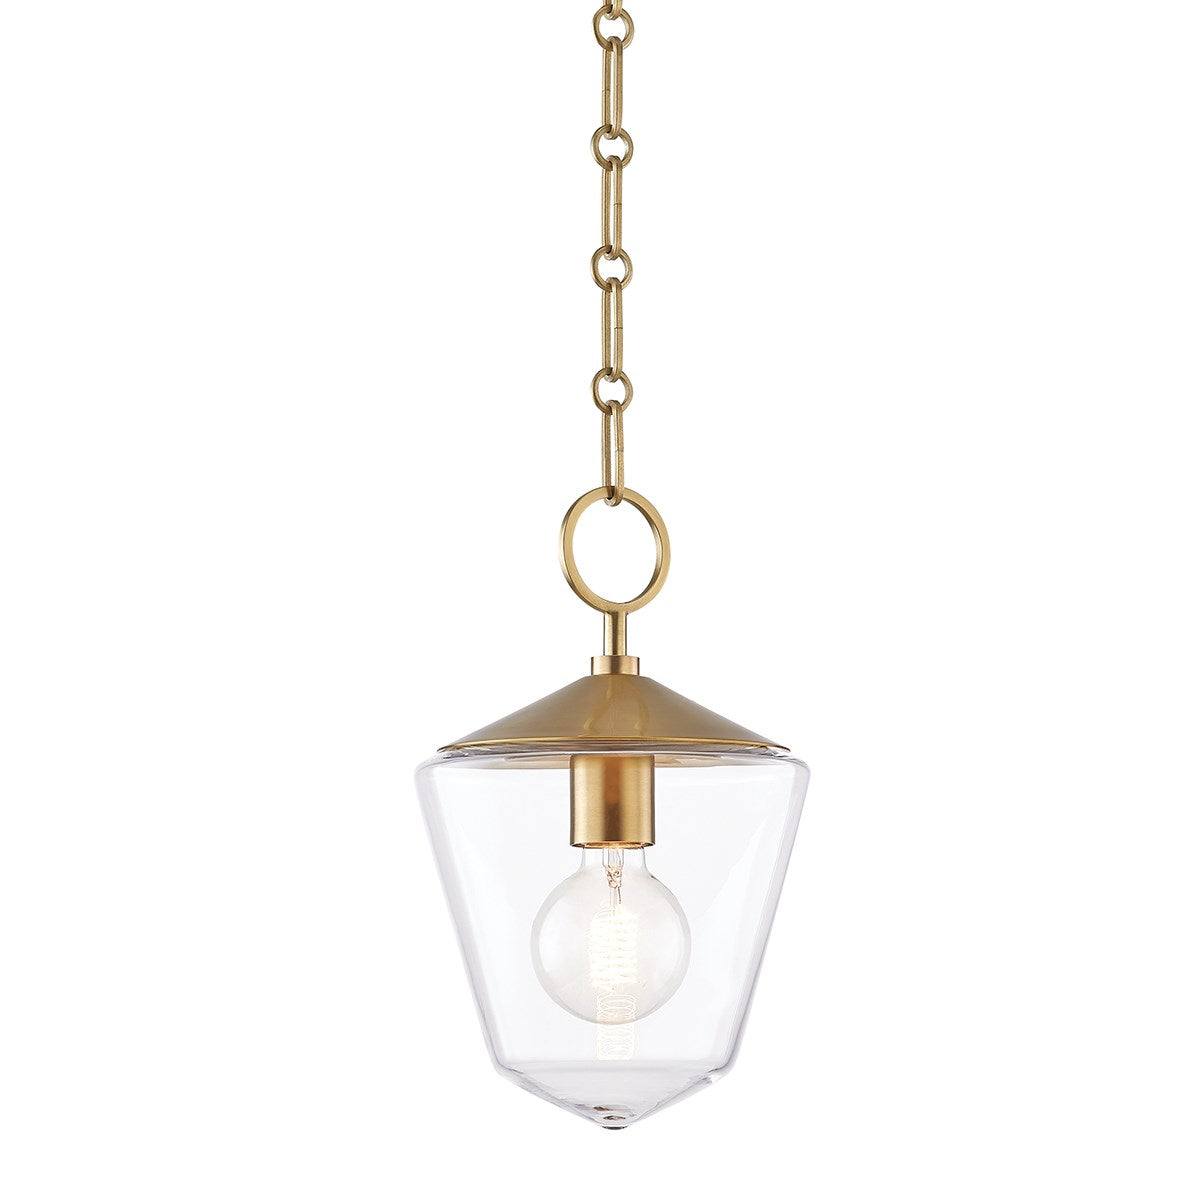 Greene - 1 LIGHT SMALL PENDANT Lantern Hudson Valley Lighting Aged Brass  